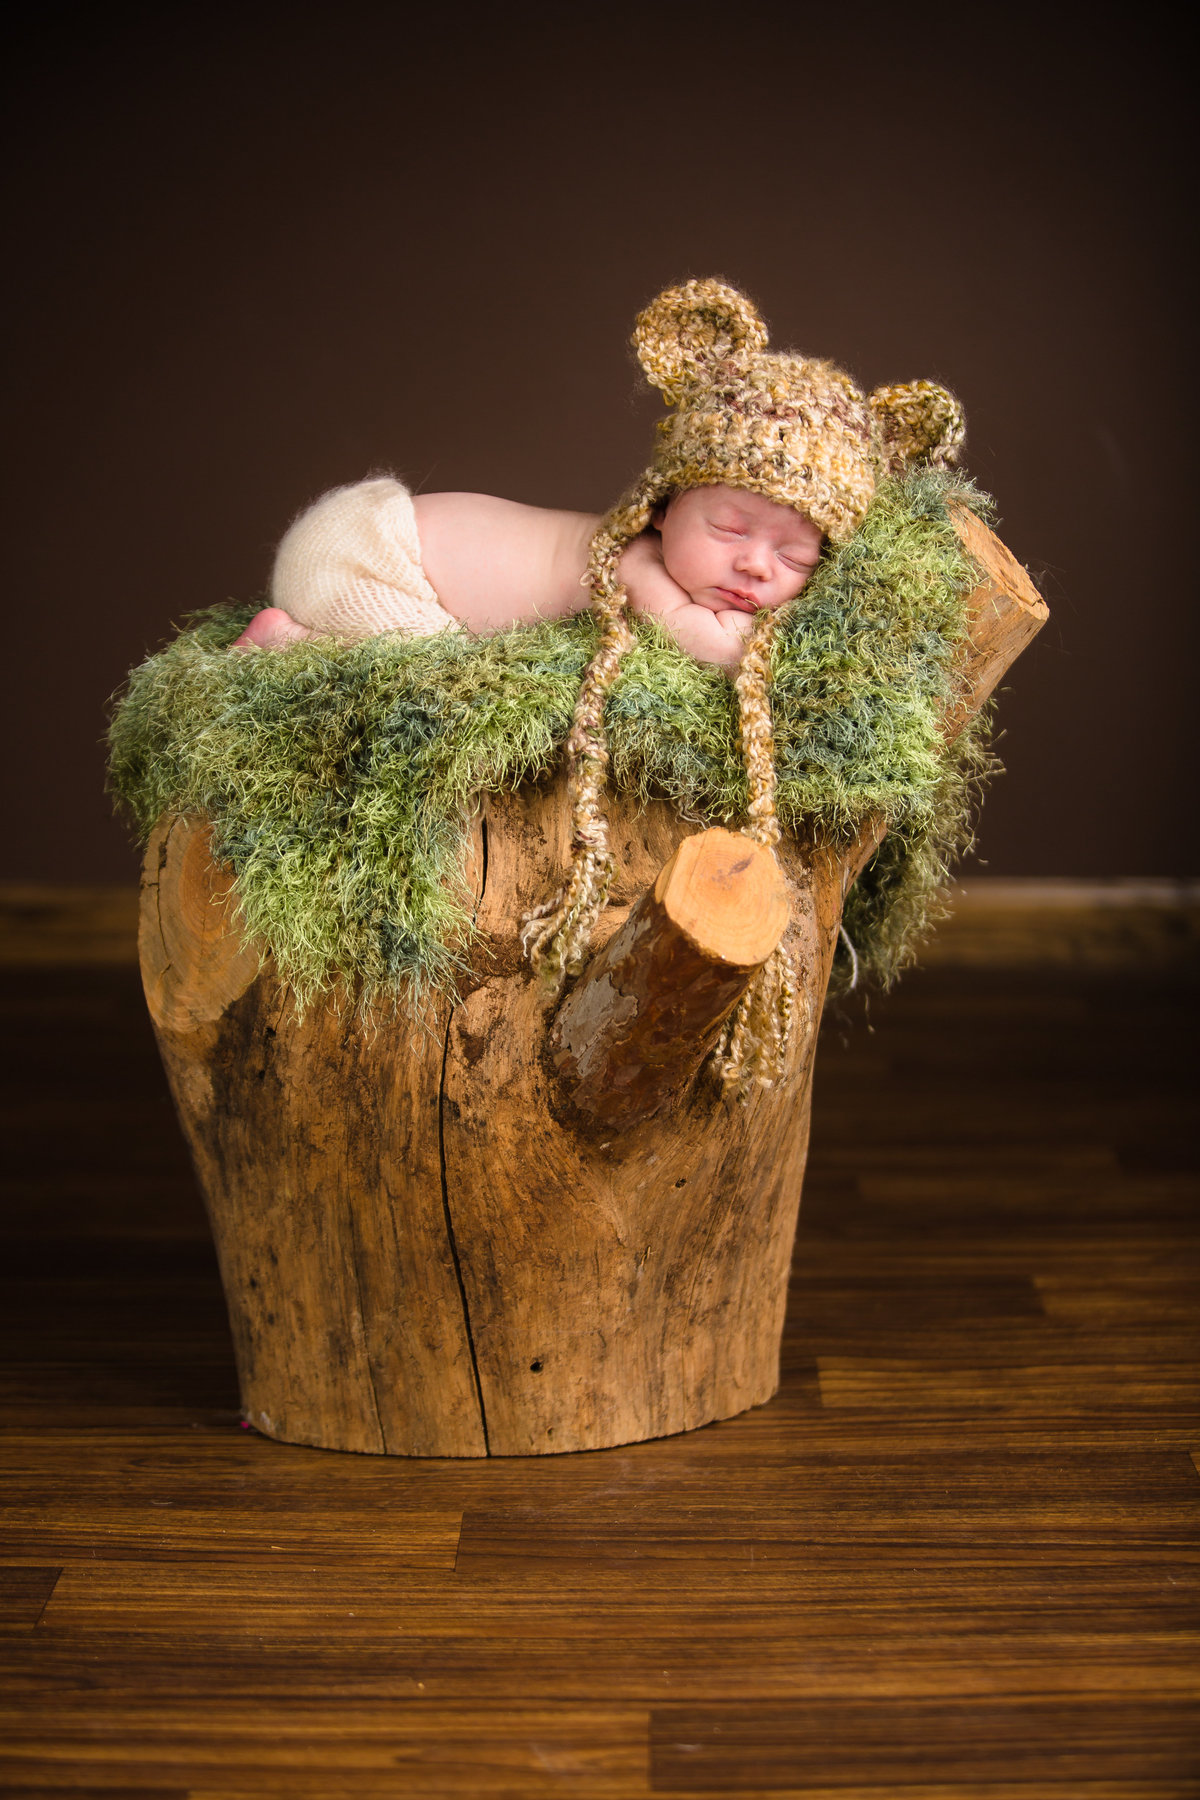 Newborn baby with a bear hat sleeping on stump